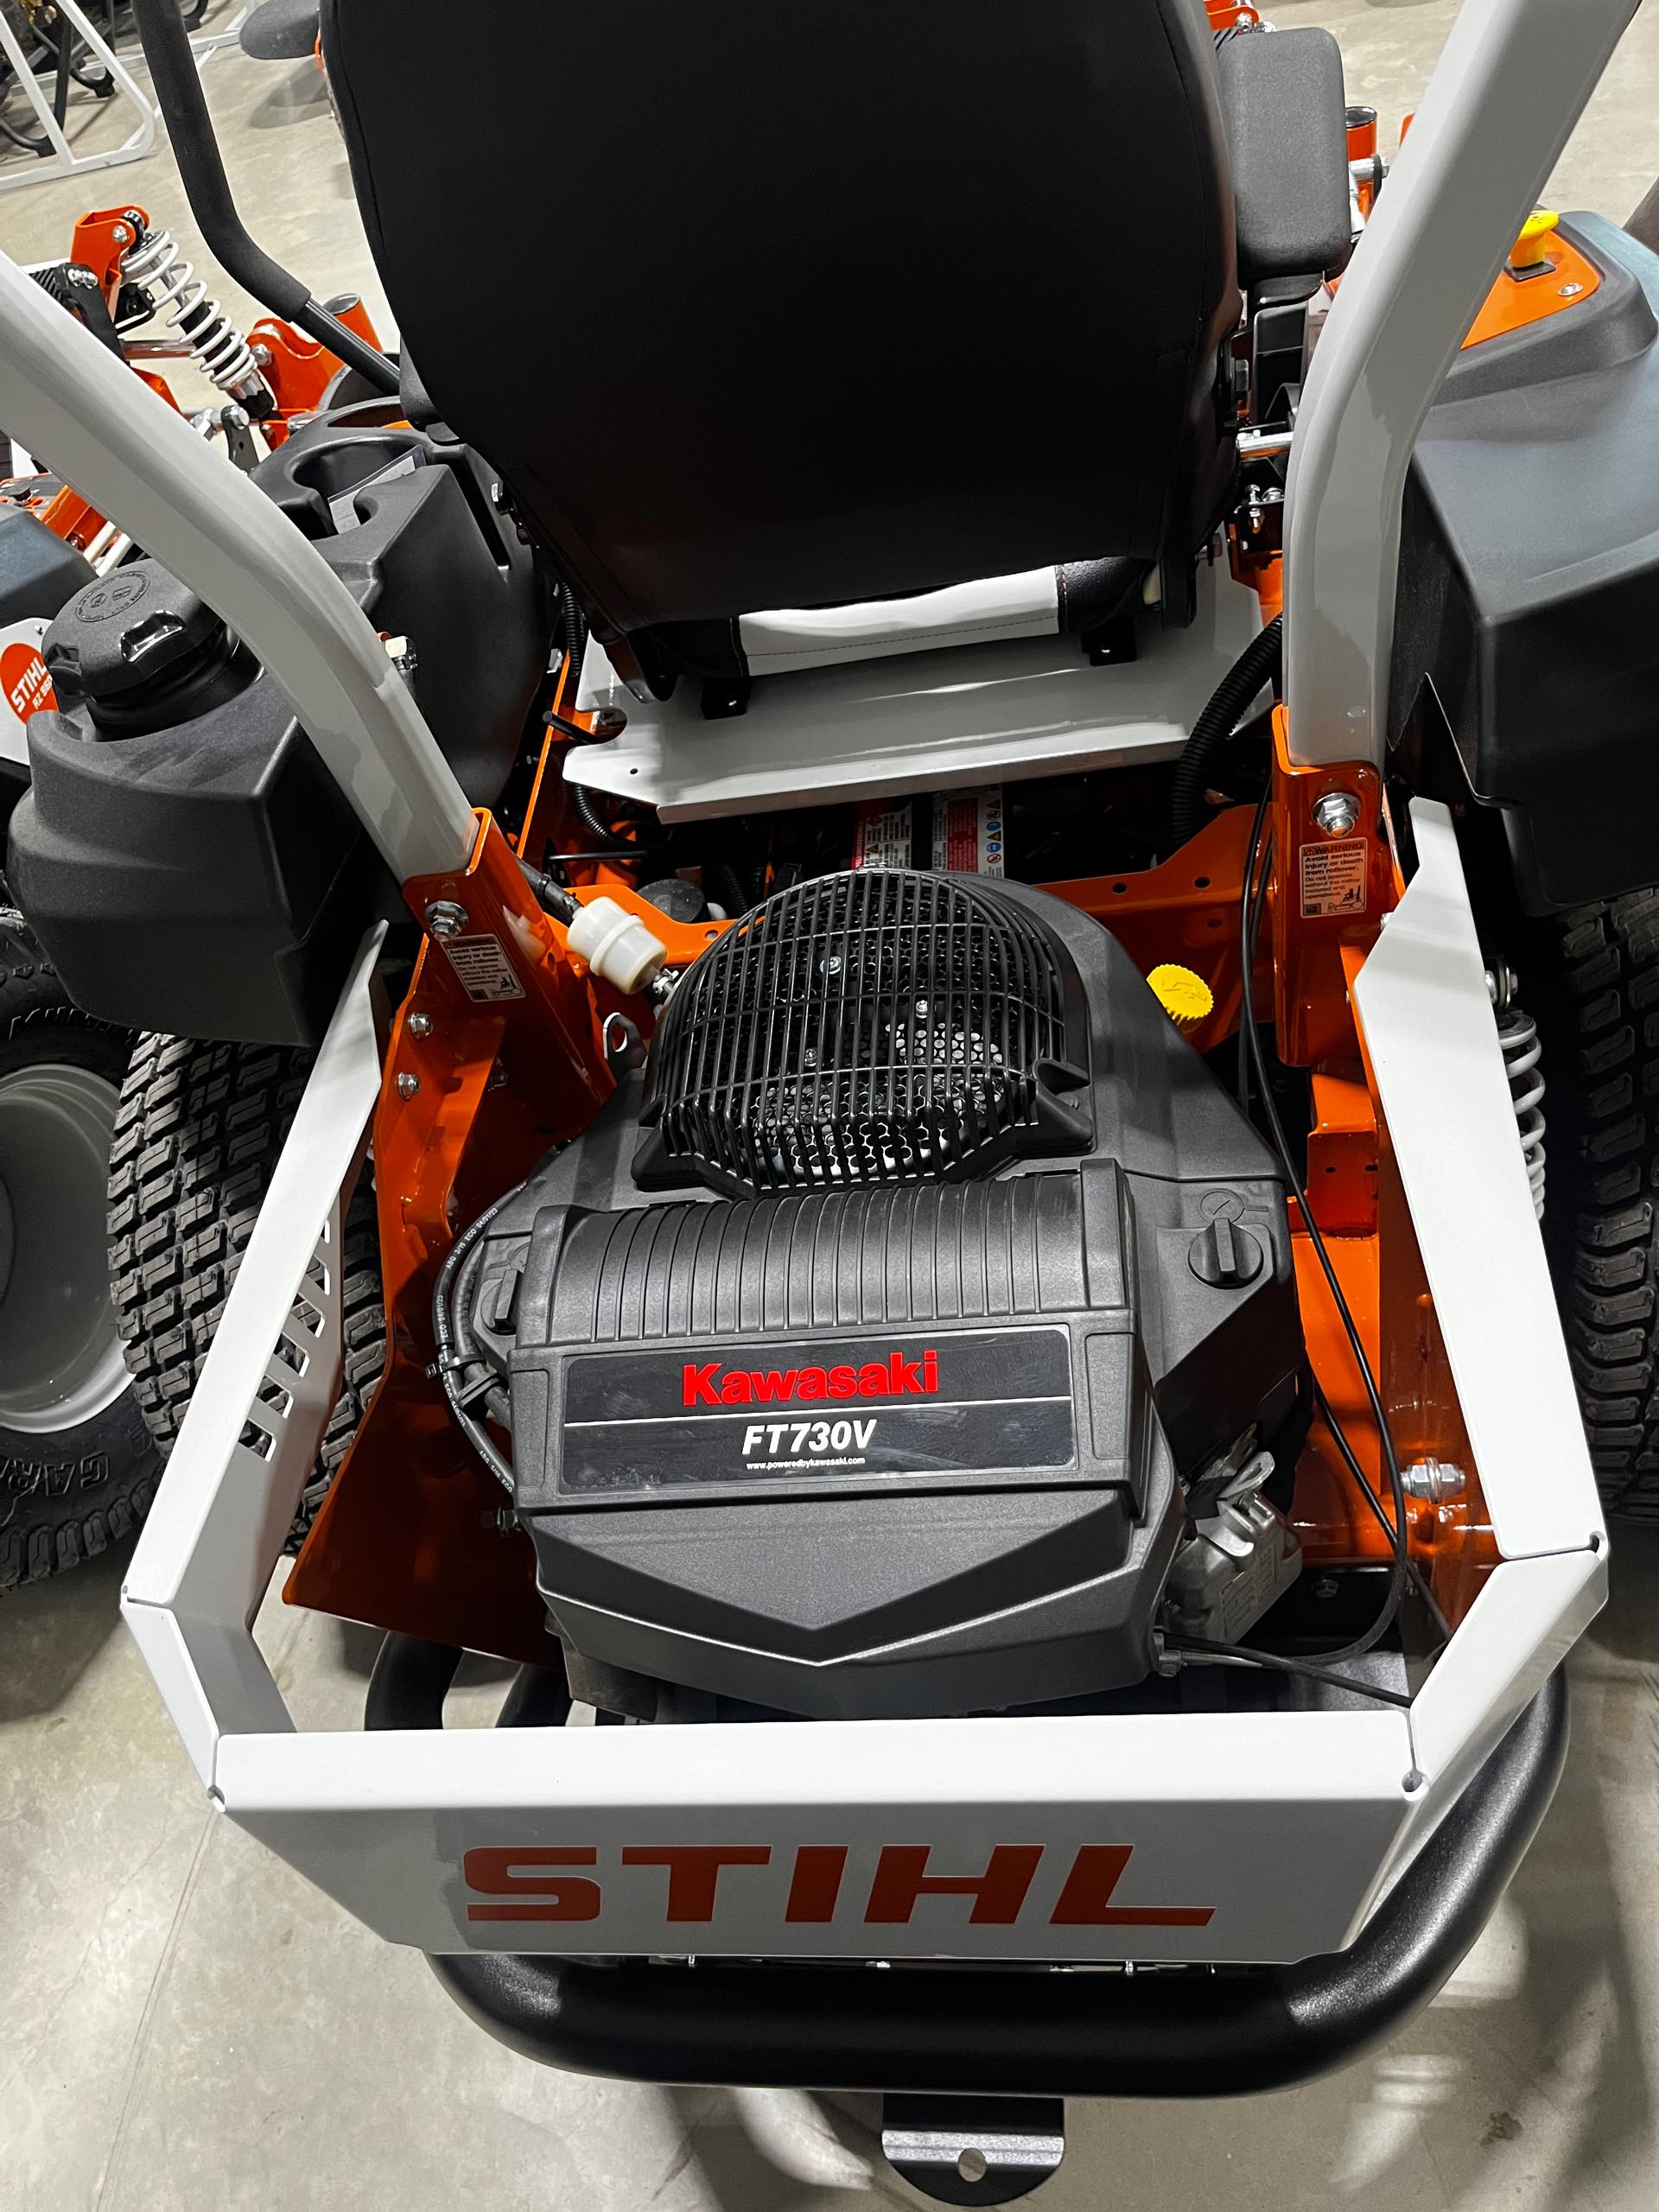 2024 STIHL Lawn Mowers RZ 500 Series at Patriot Golf Carts & Powersports